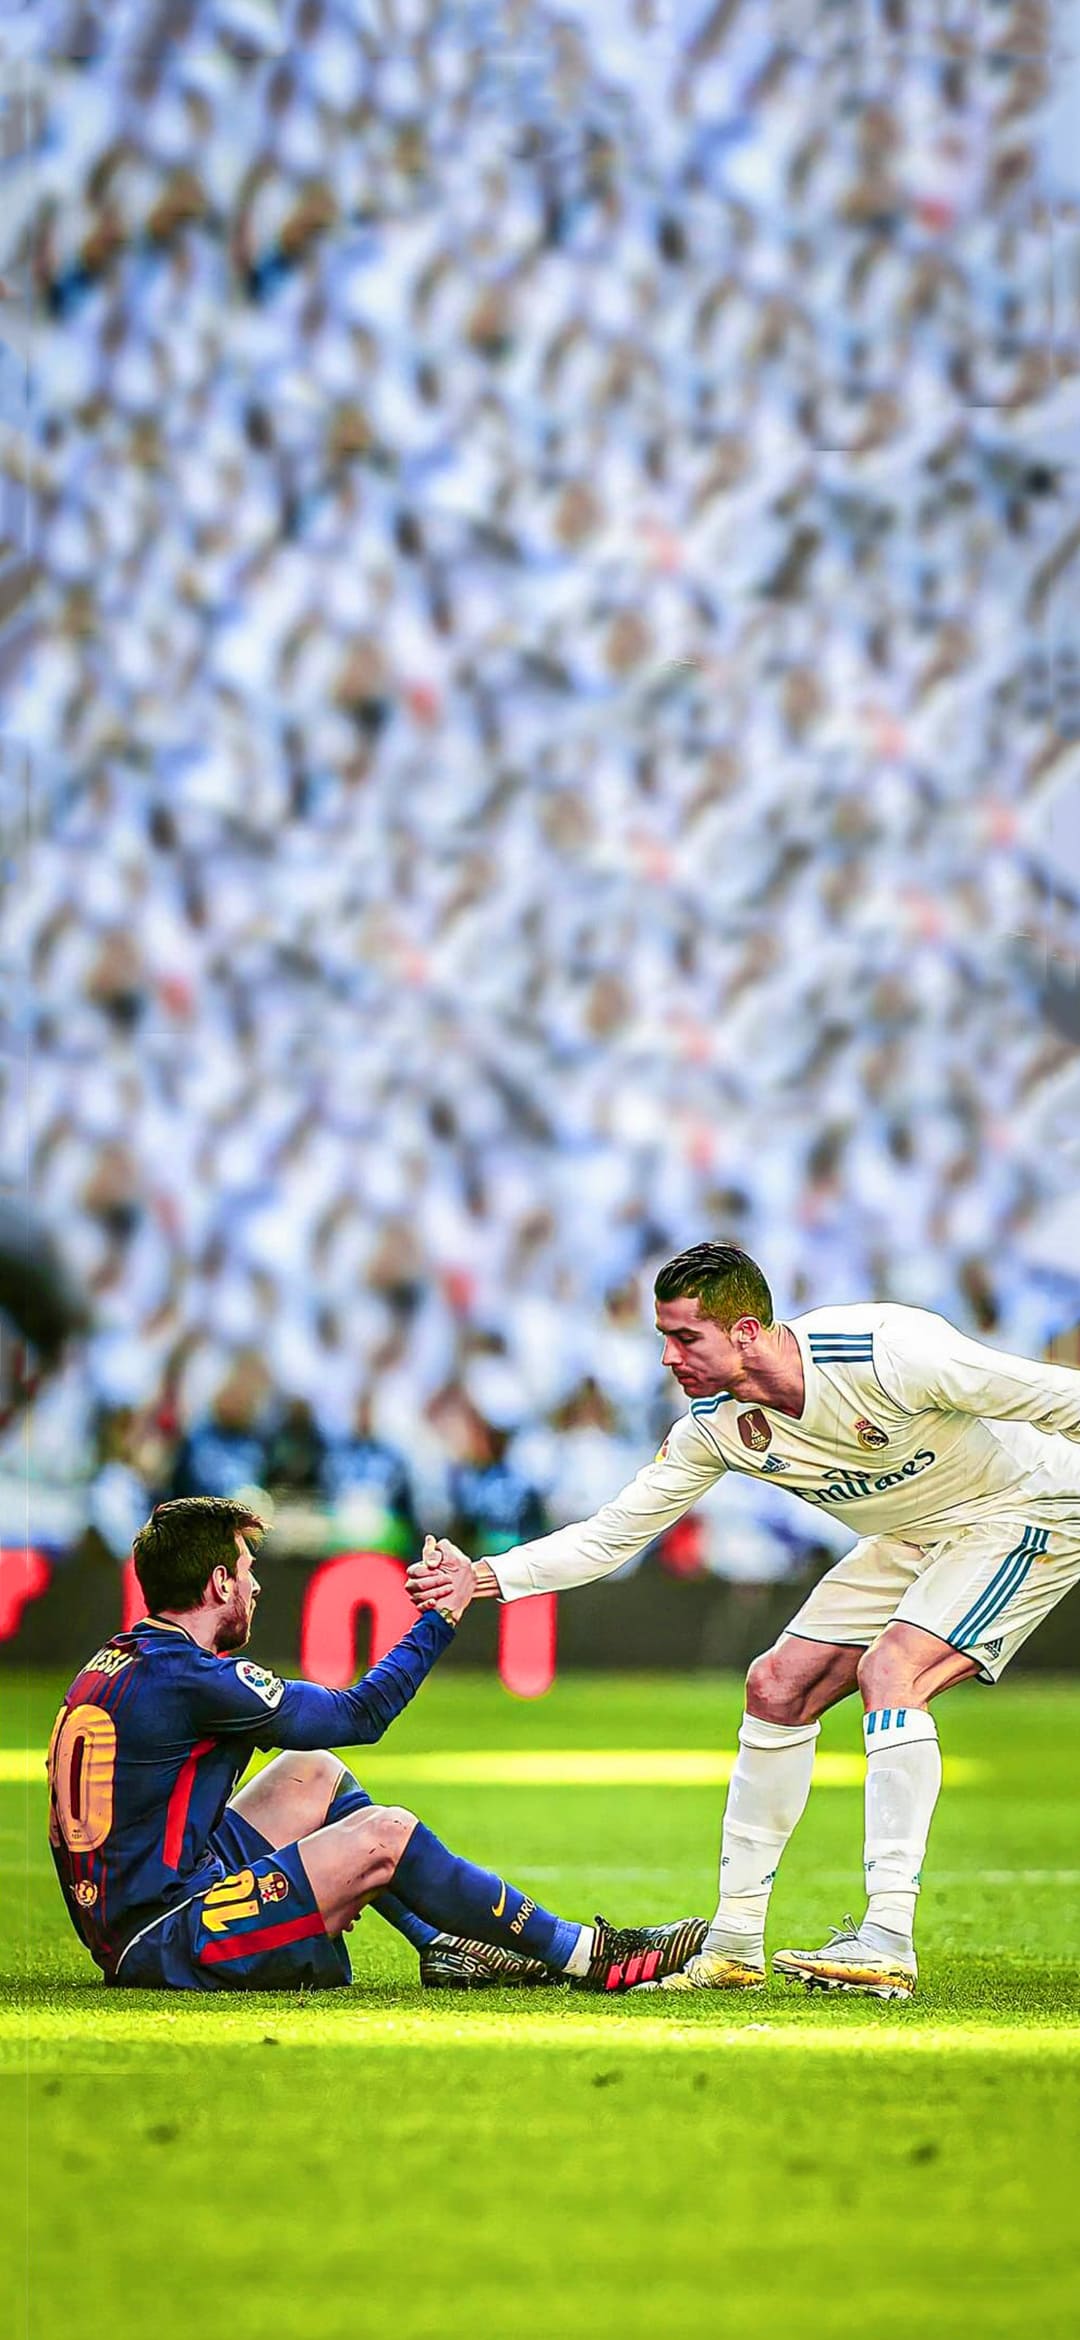 Ronaldo And Messi Wallpaper - TubeWP